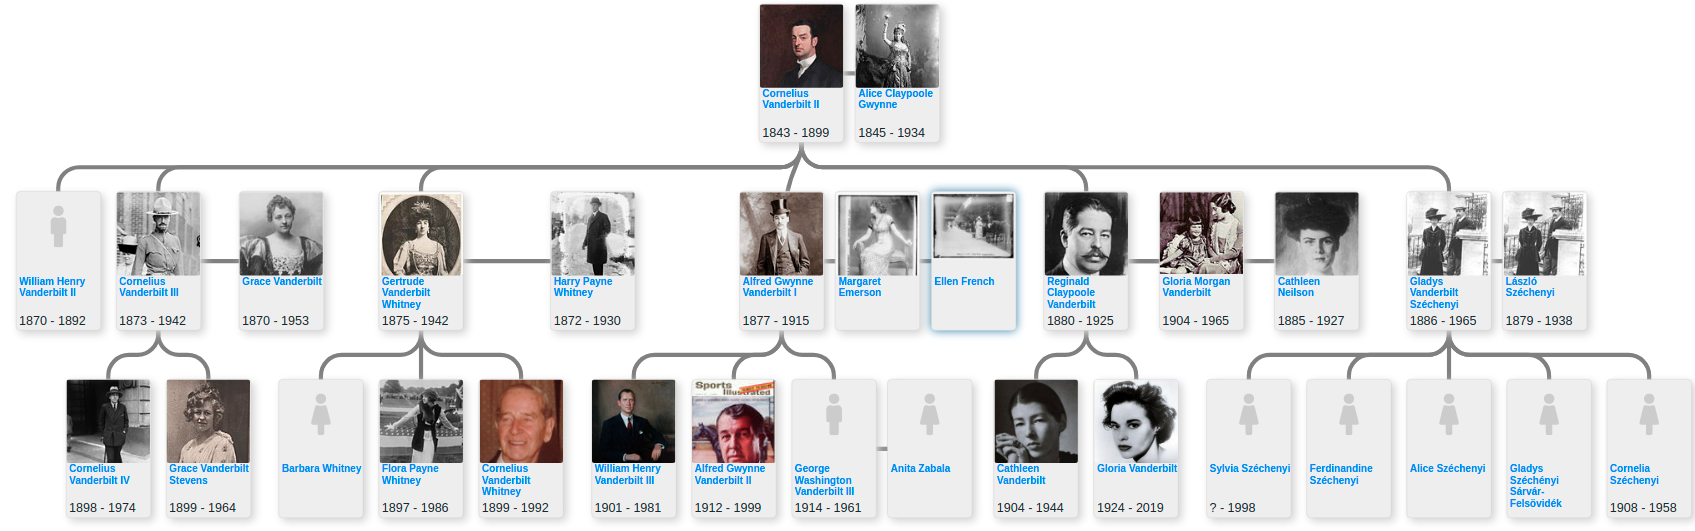 Vanderbilt family tree - Blog for Entitree